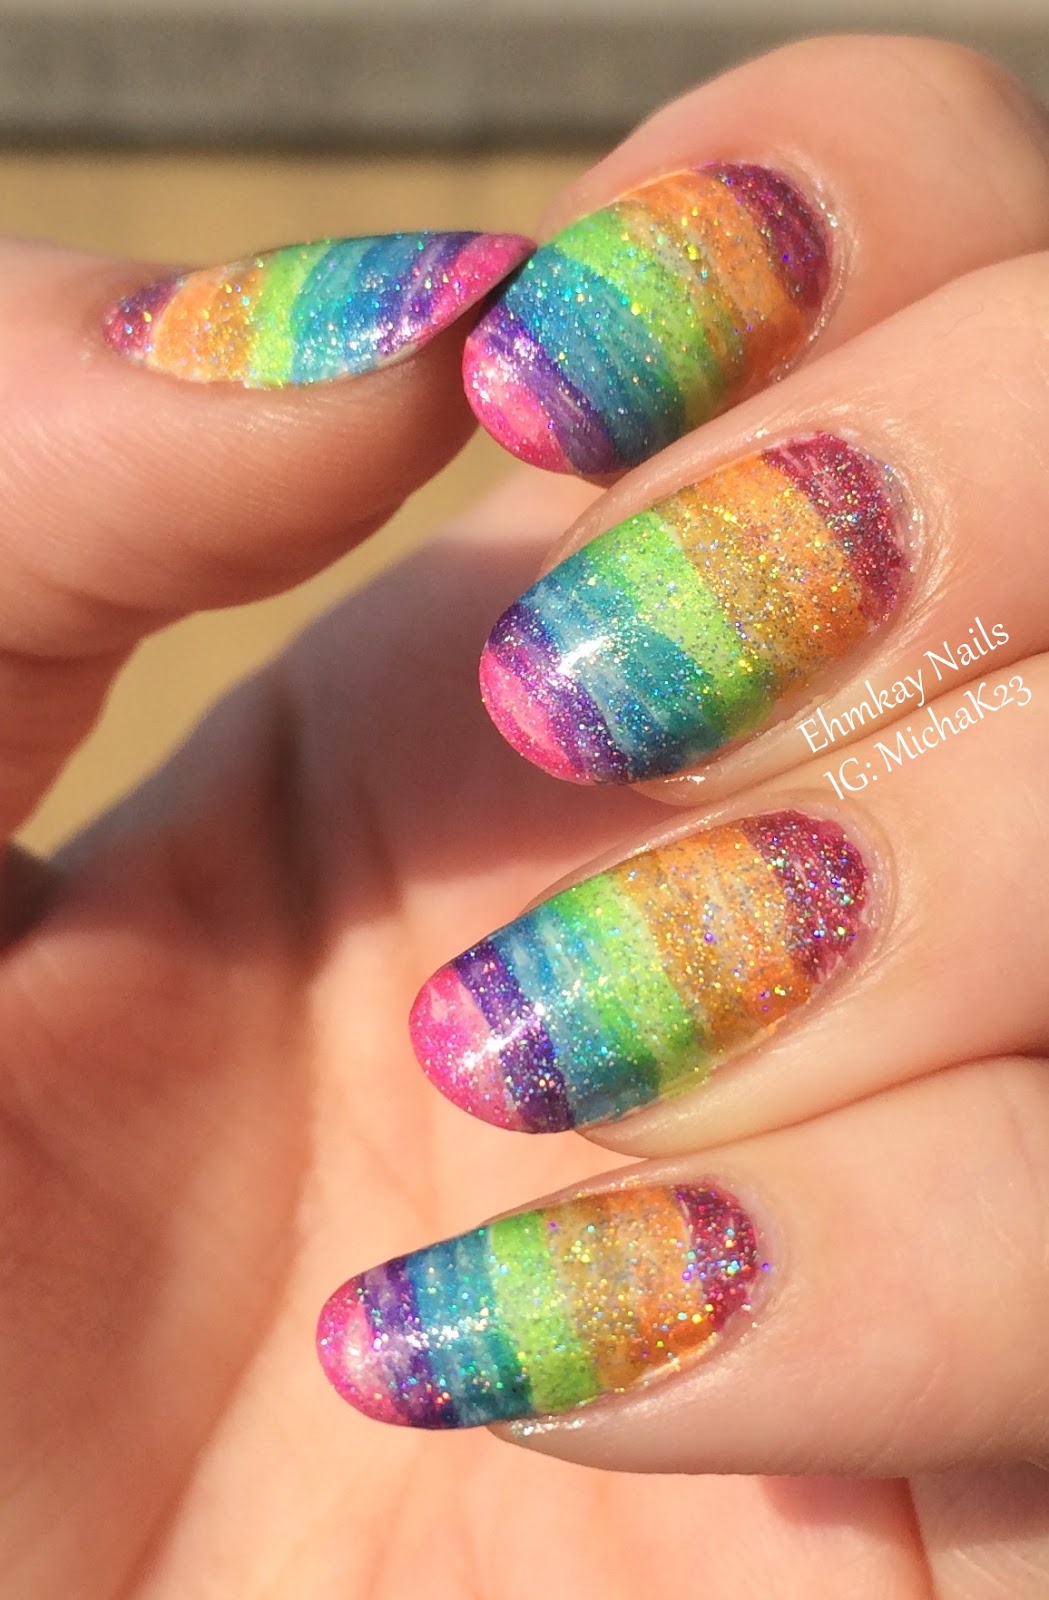 ehmkay nails: Cirque Colors Holographic Rainbow Stripes Nail Art